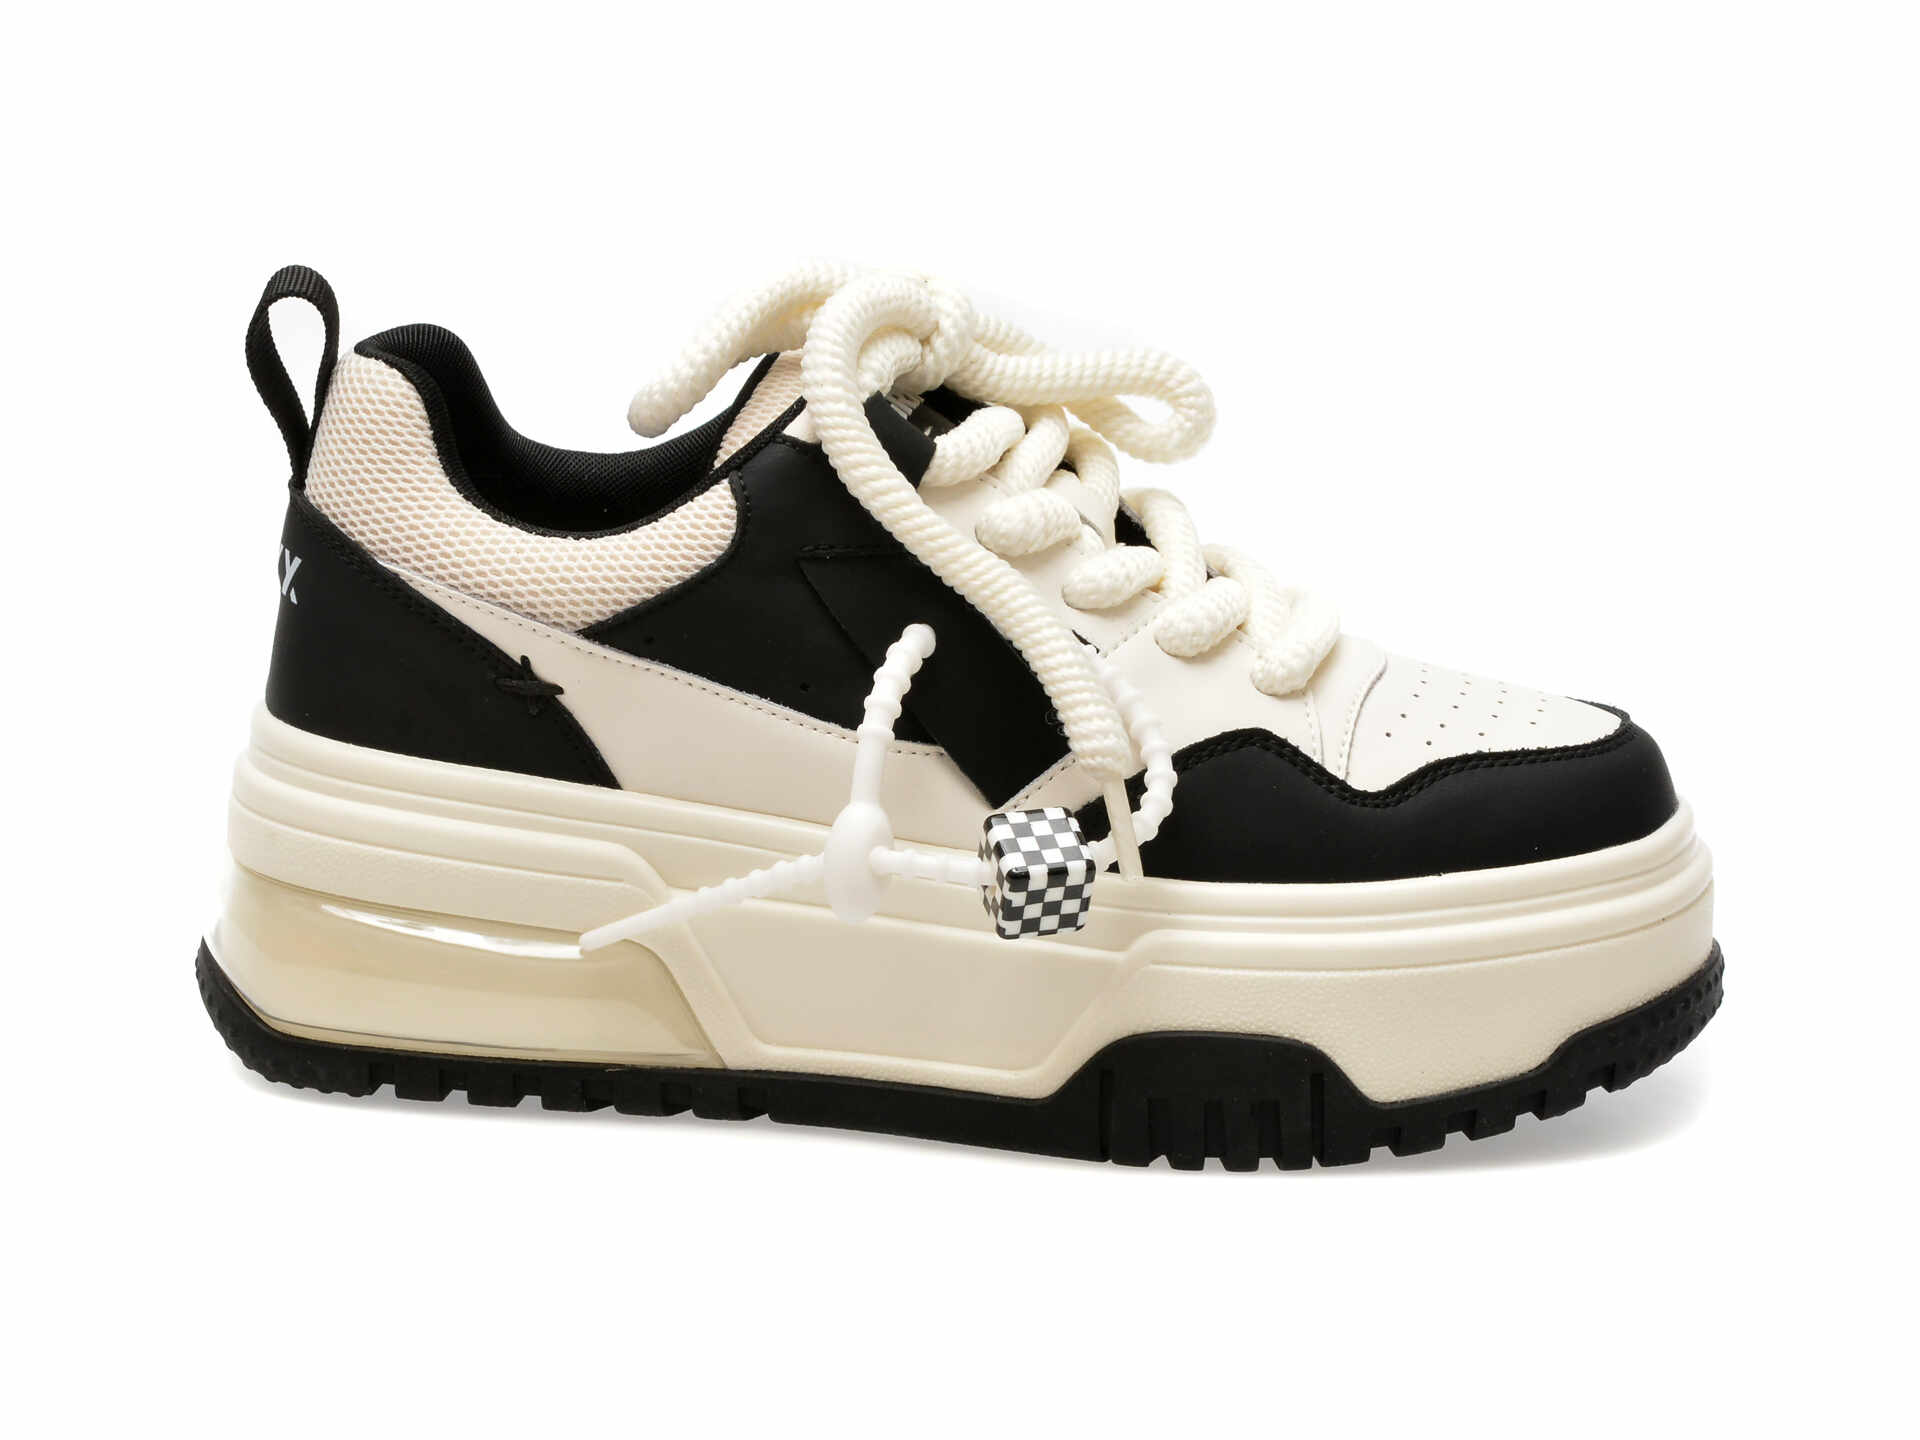 Pantofi sport GRYXX alb-negru, 2822, din piele naturala